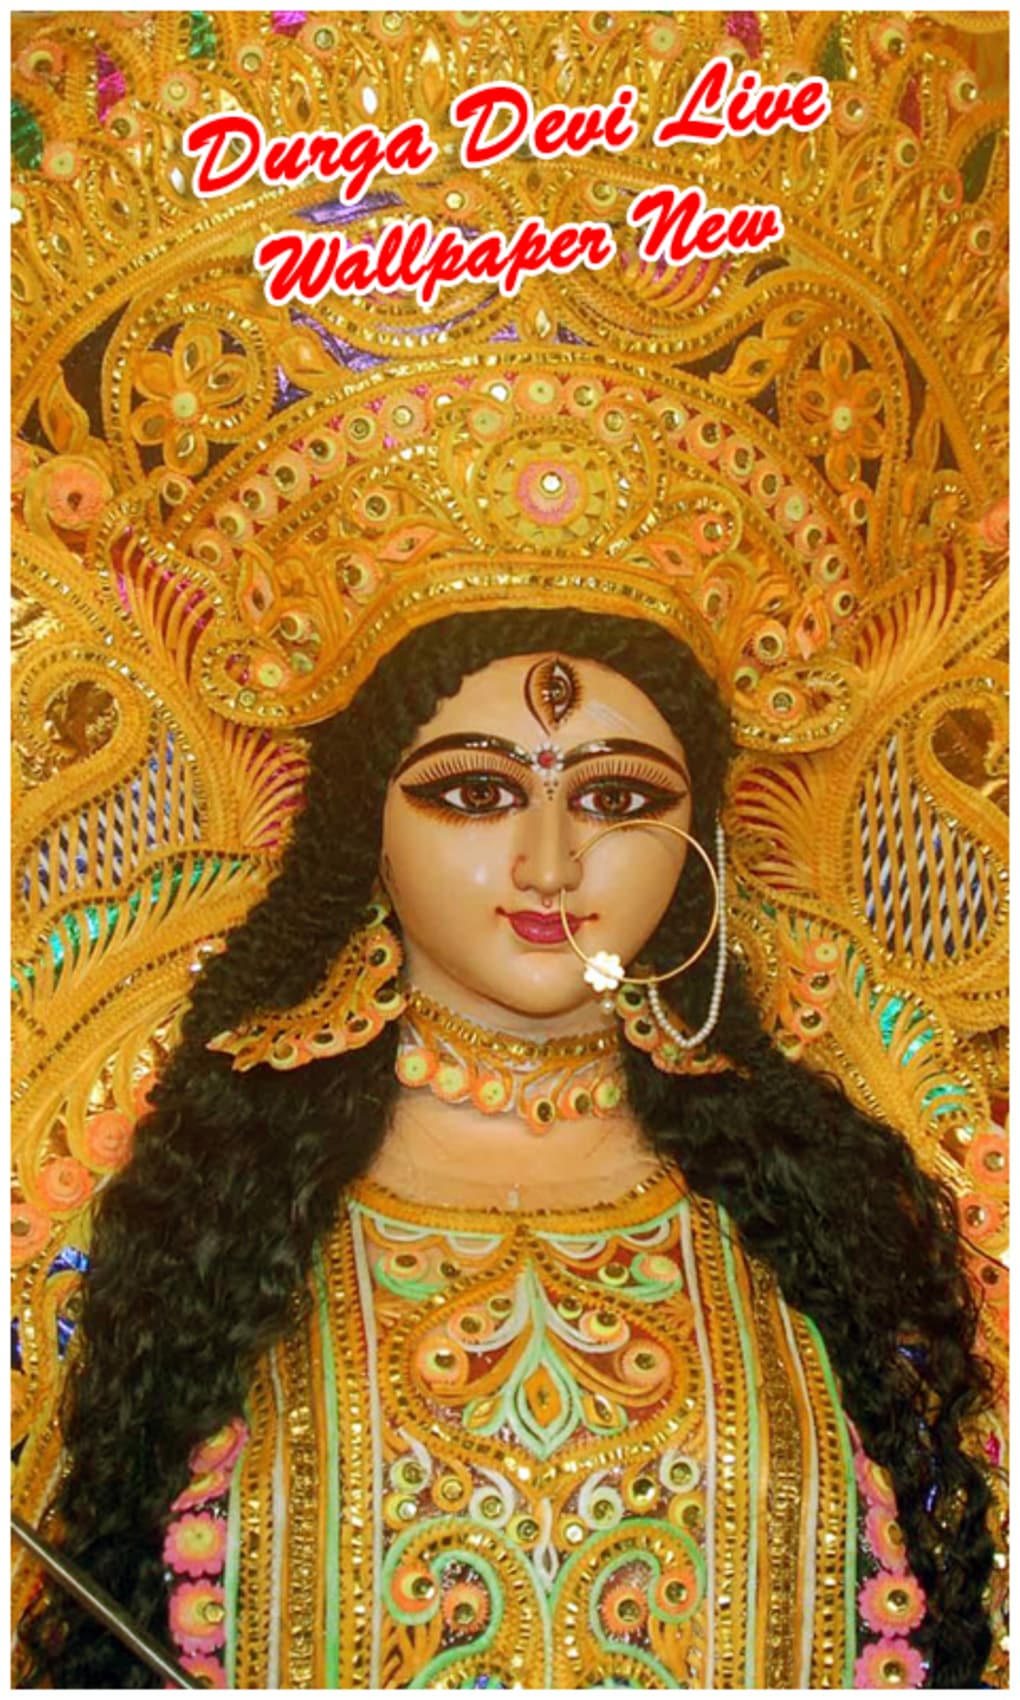 Durga Devi Live Wallpaper New cho Android - Tải về